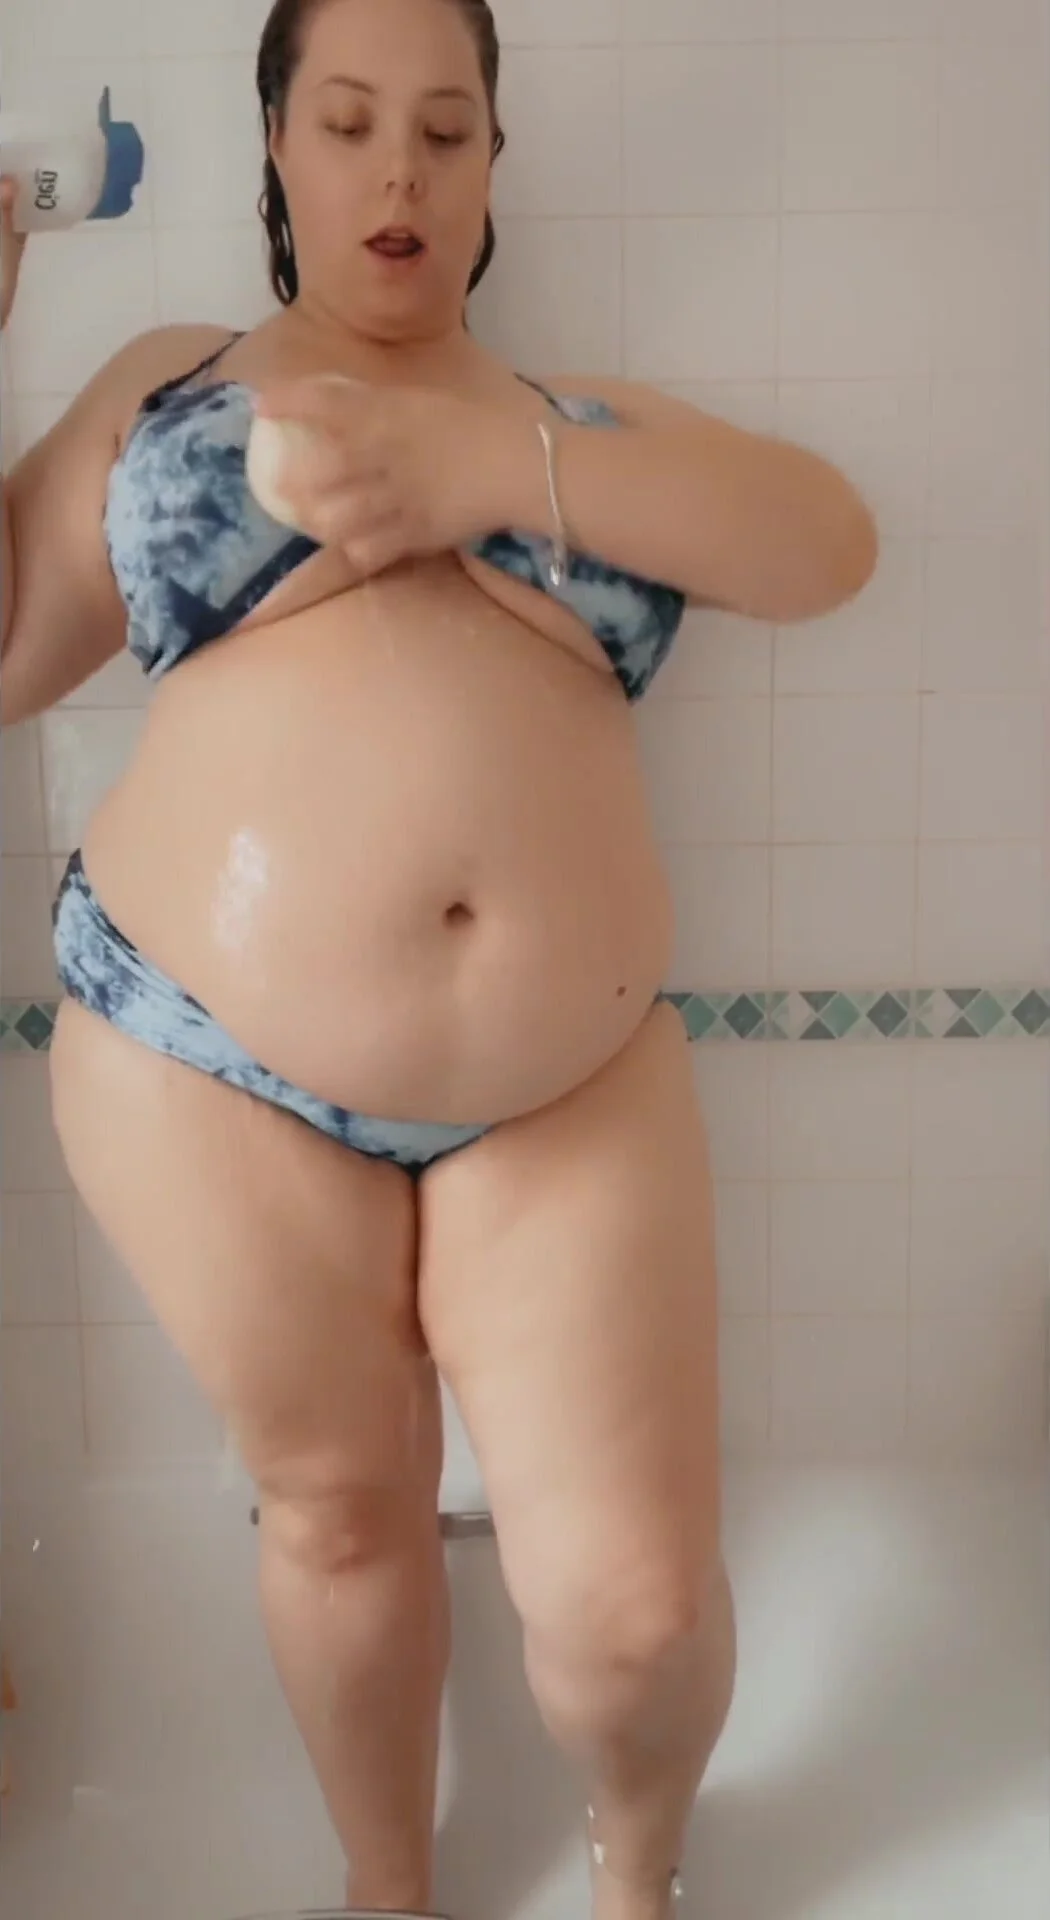 Fat Body Girl - Fat girl , fat body fat ass , fatbelly - ThisVid.com